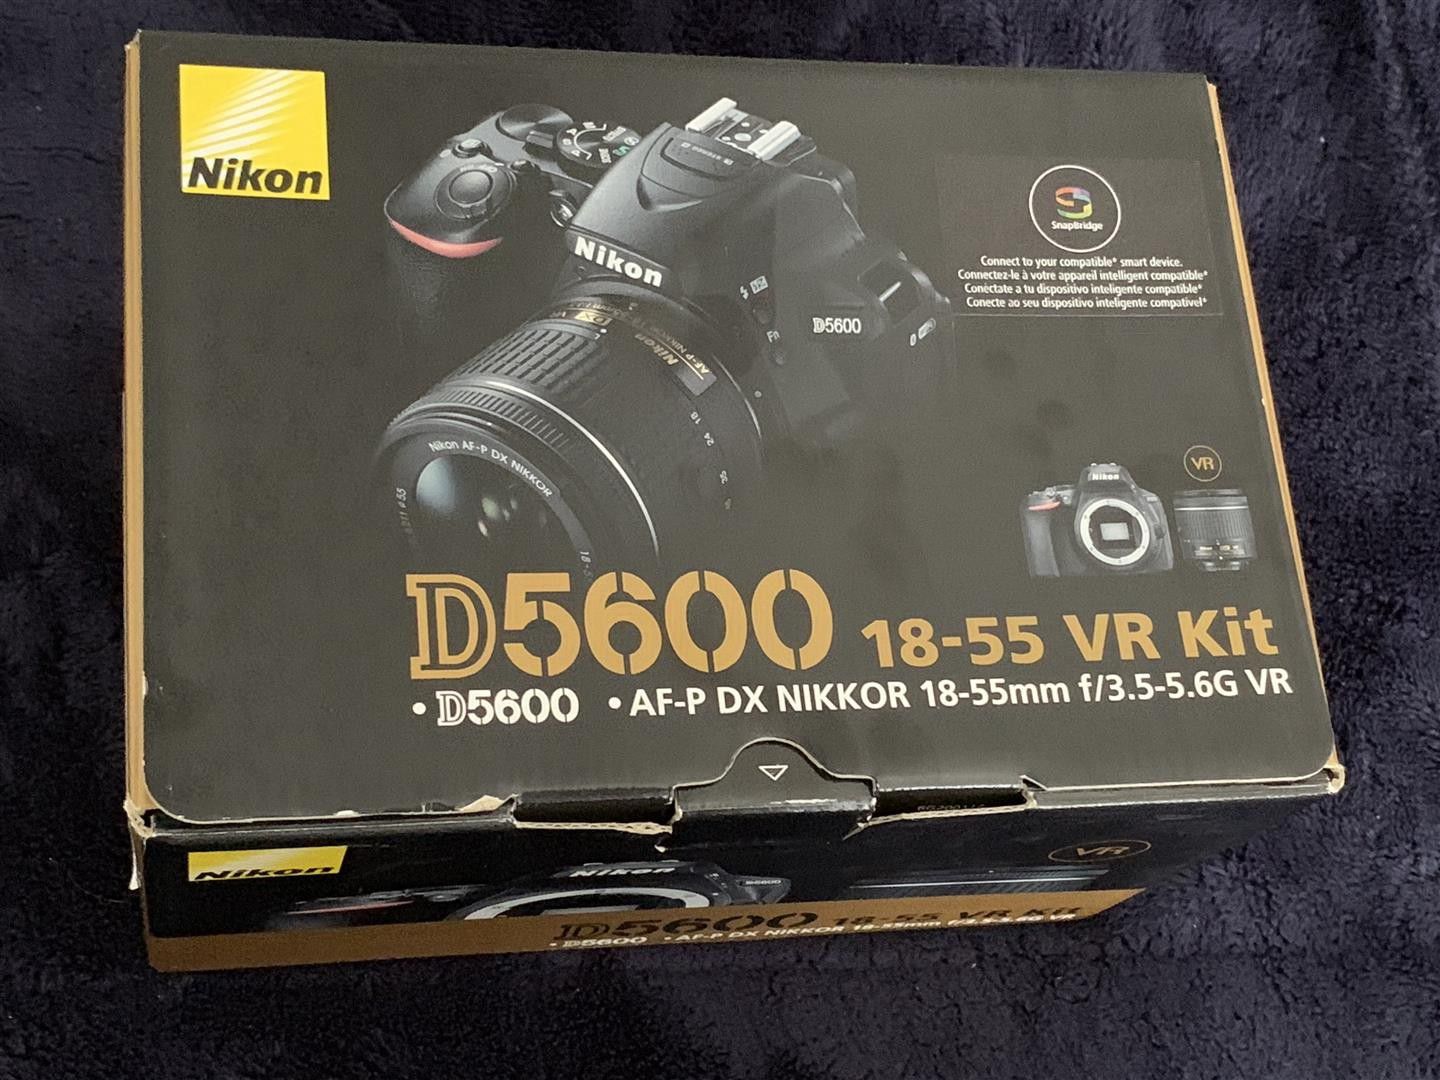 Nikon D5600 DSLR Digital SLR Camera with 18-55mm Lens - Black USA MODEL